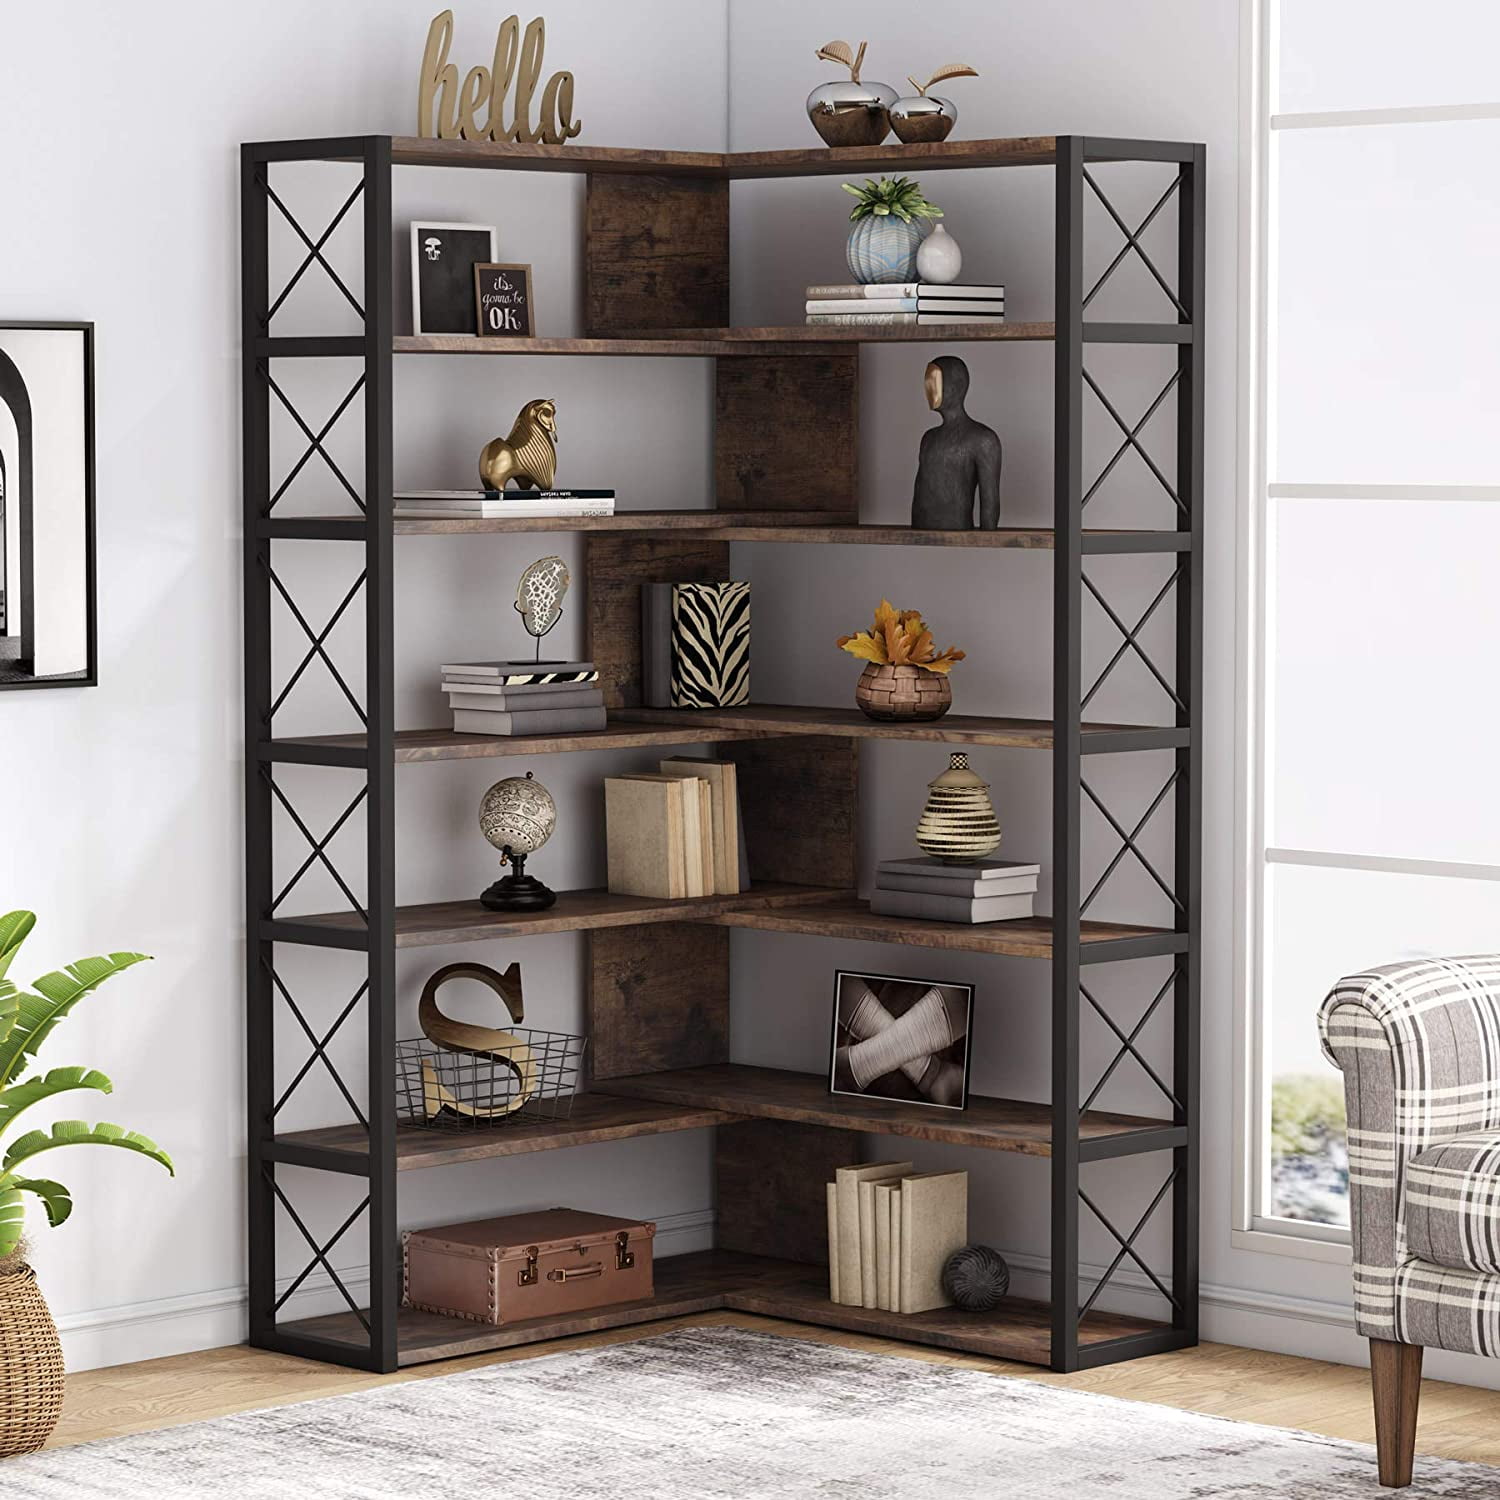 Credenza unit with bookshelves